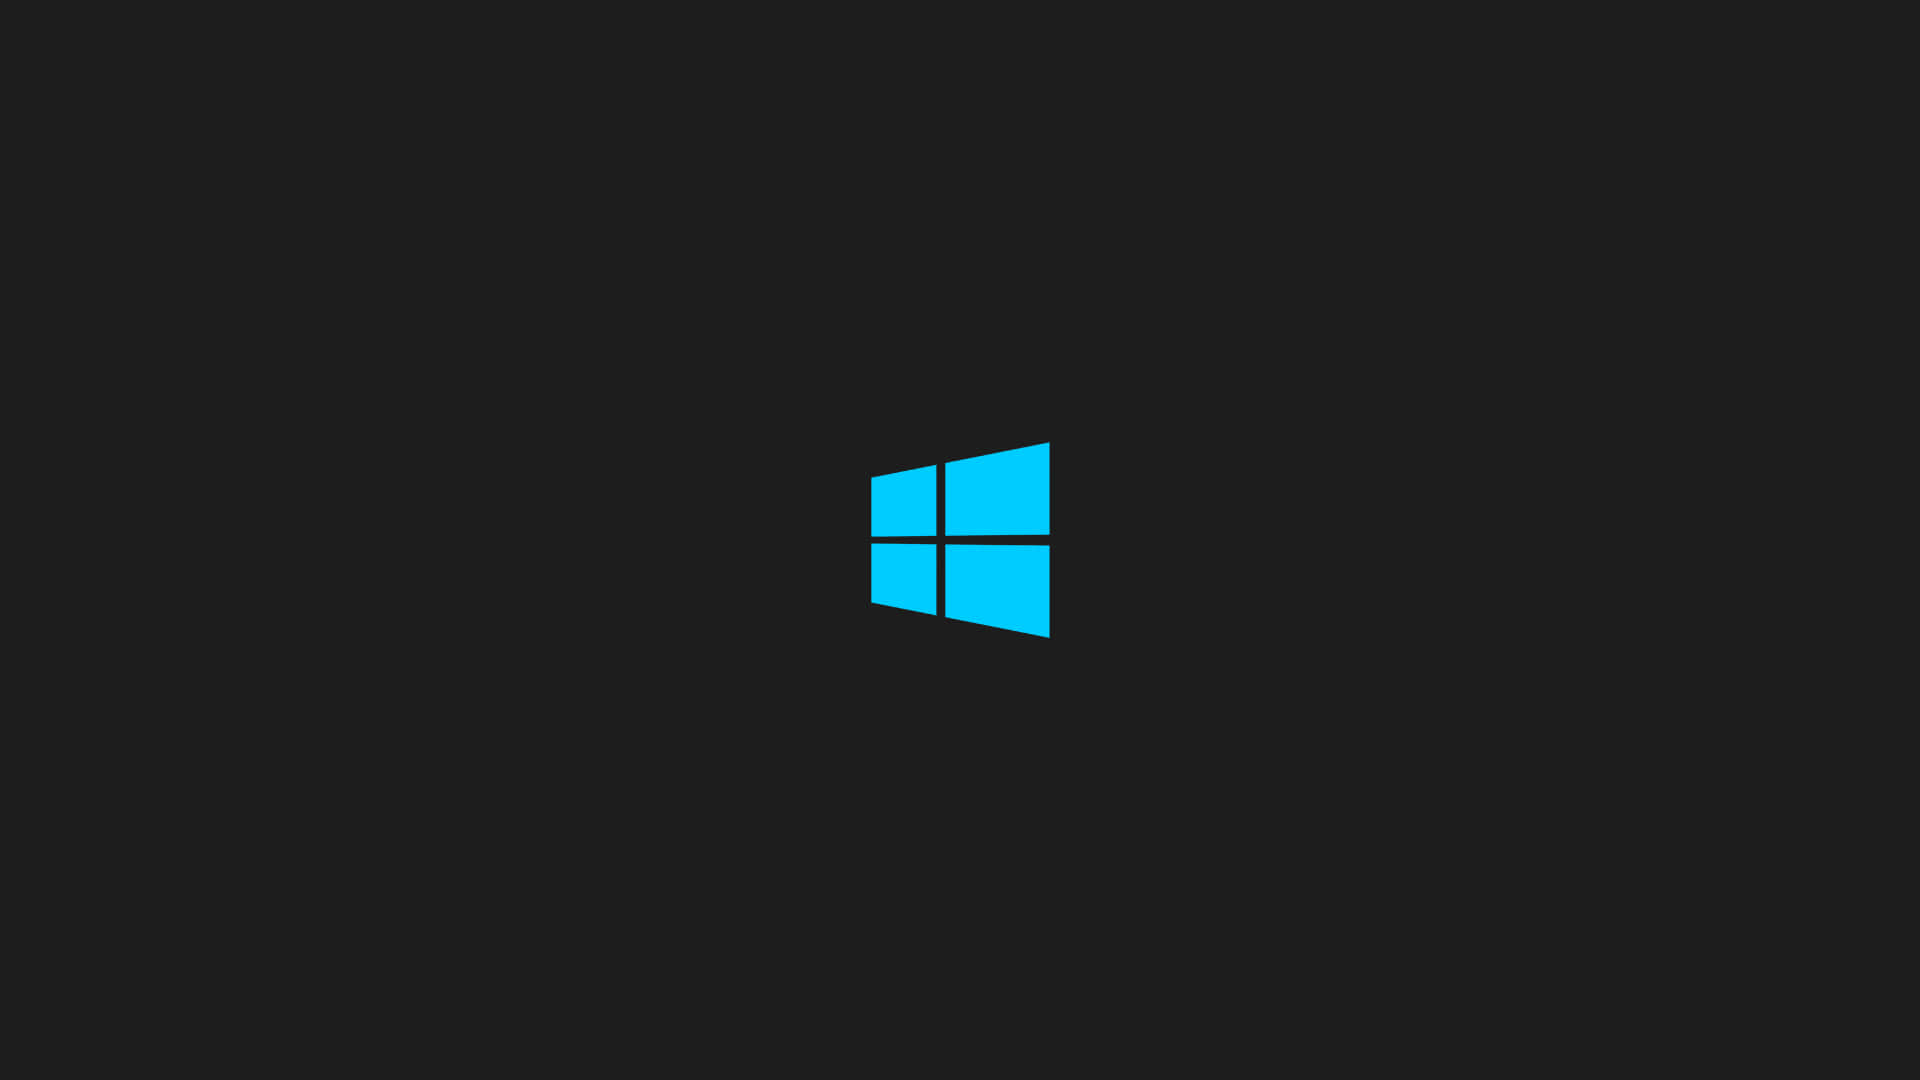 Minimalist Windows 10 Logo Background